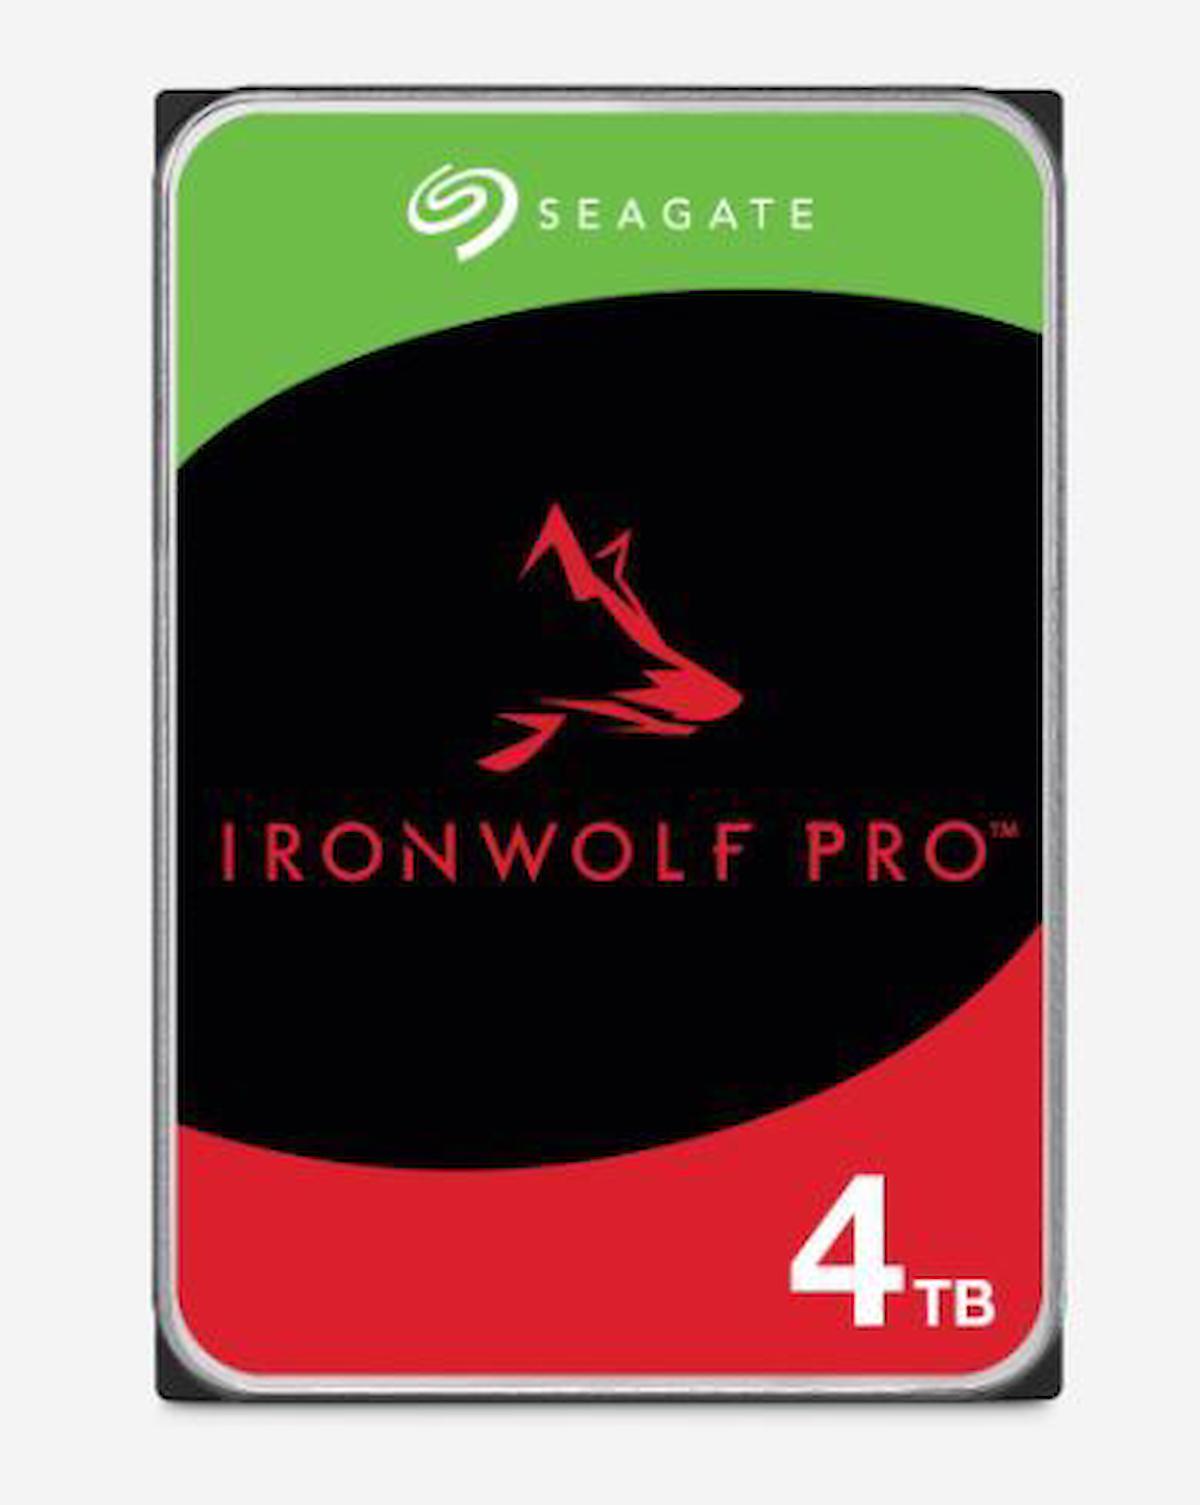 Seagate Ironwolf Pro New ST4000NT001 4 TB 3.5 inç 7200 RPM 256 MB SATA 3.0 Nas Harddisk